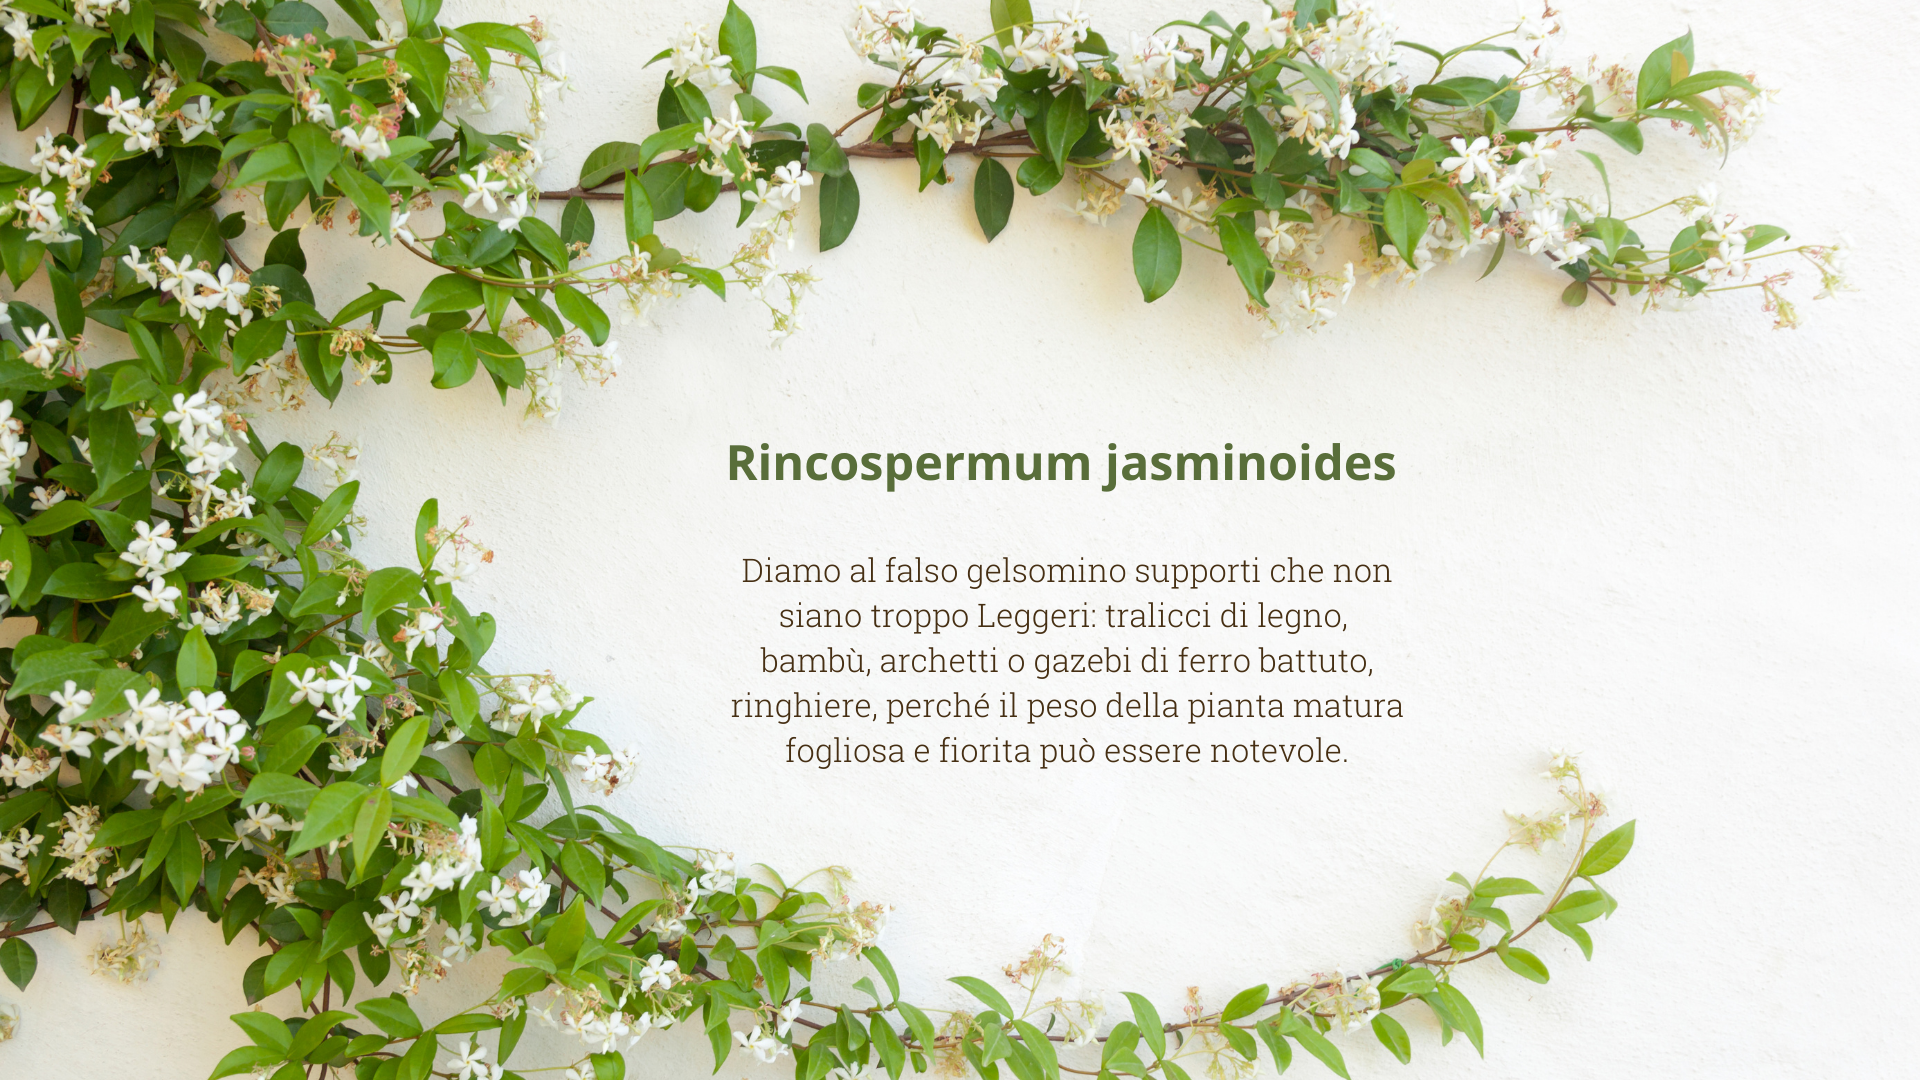 Rincospermum jasminoides